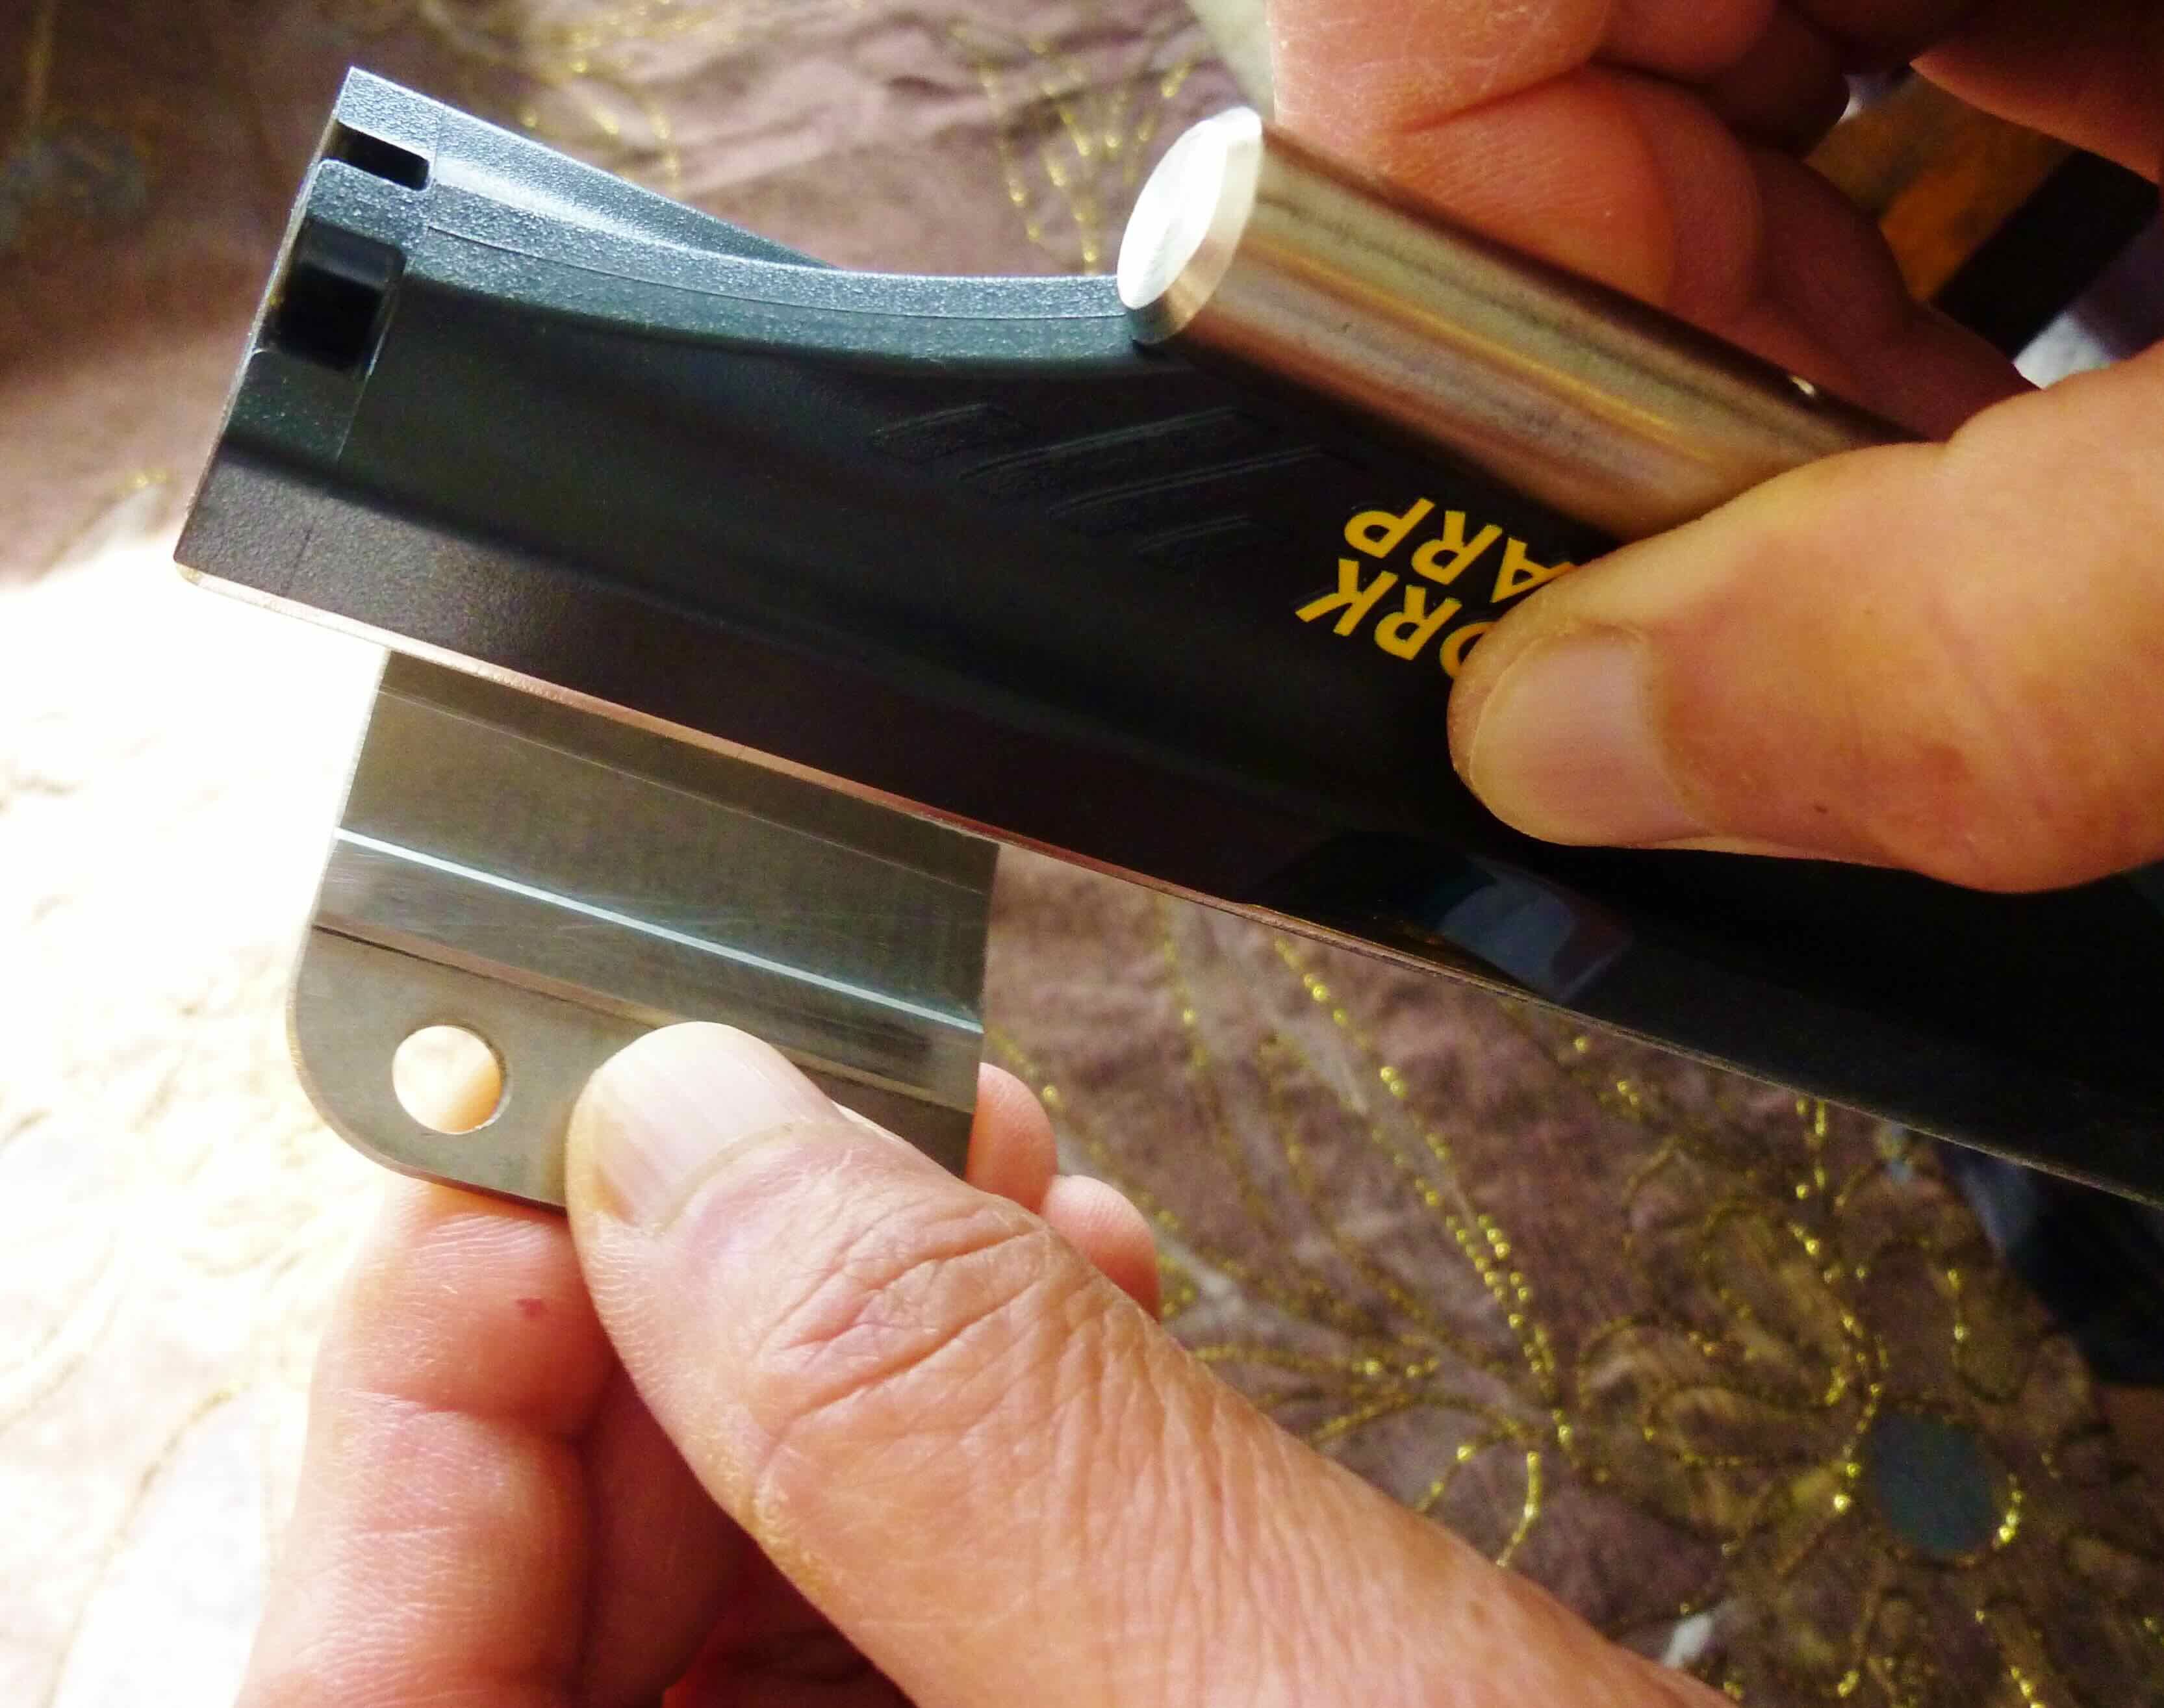 Sharpening hair clipper blades with sandpaper